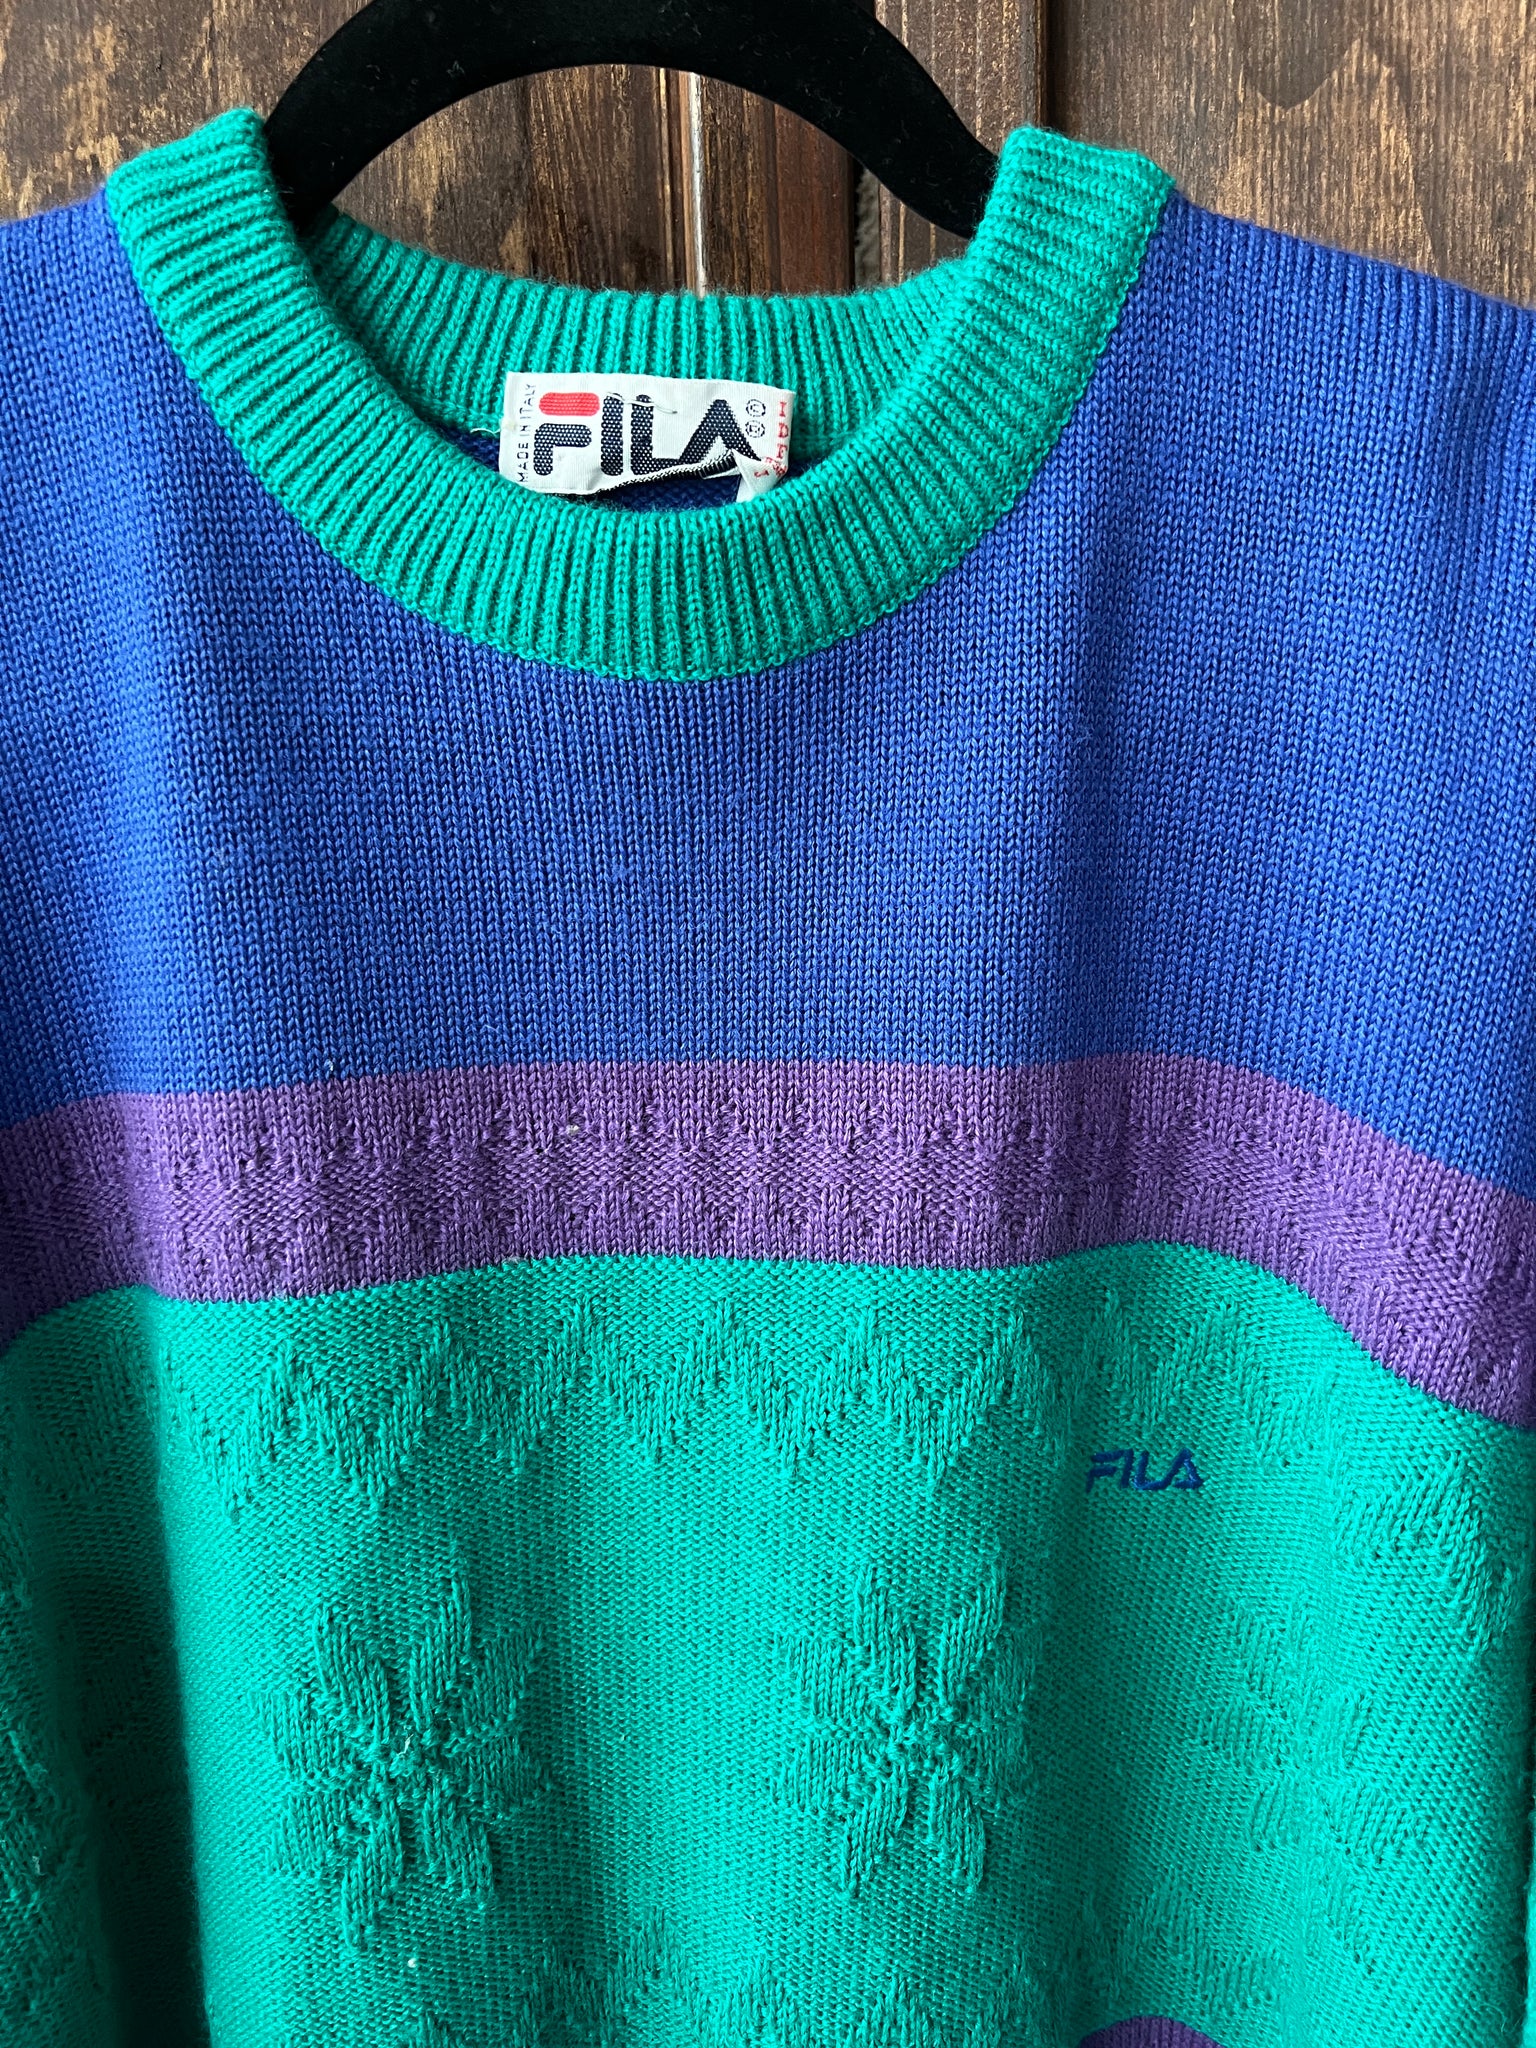 1980's MENS SWEATER- Fila blue/teal ski sweater